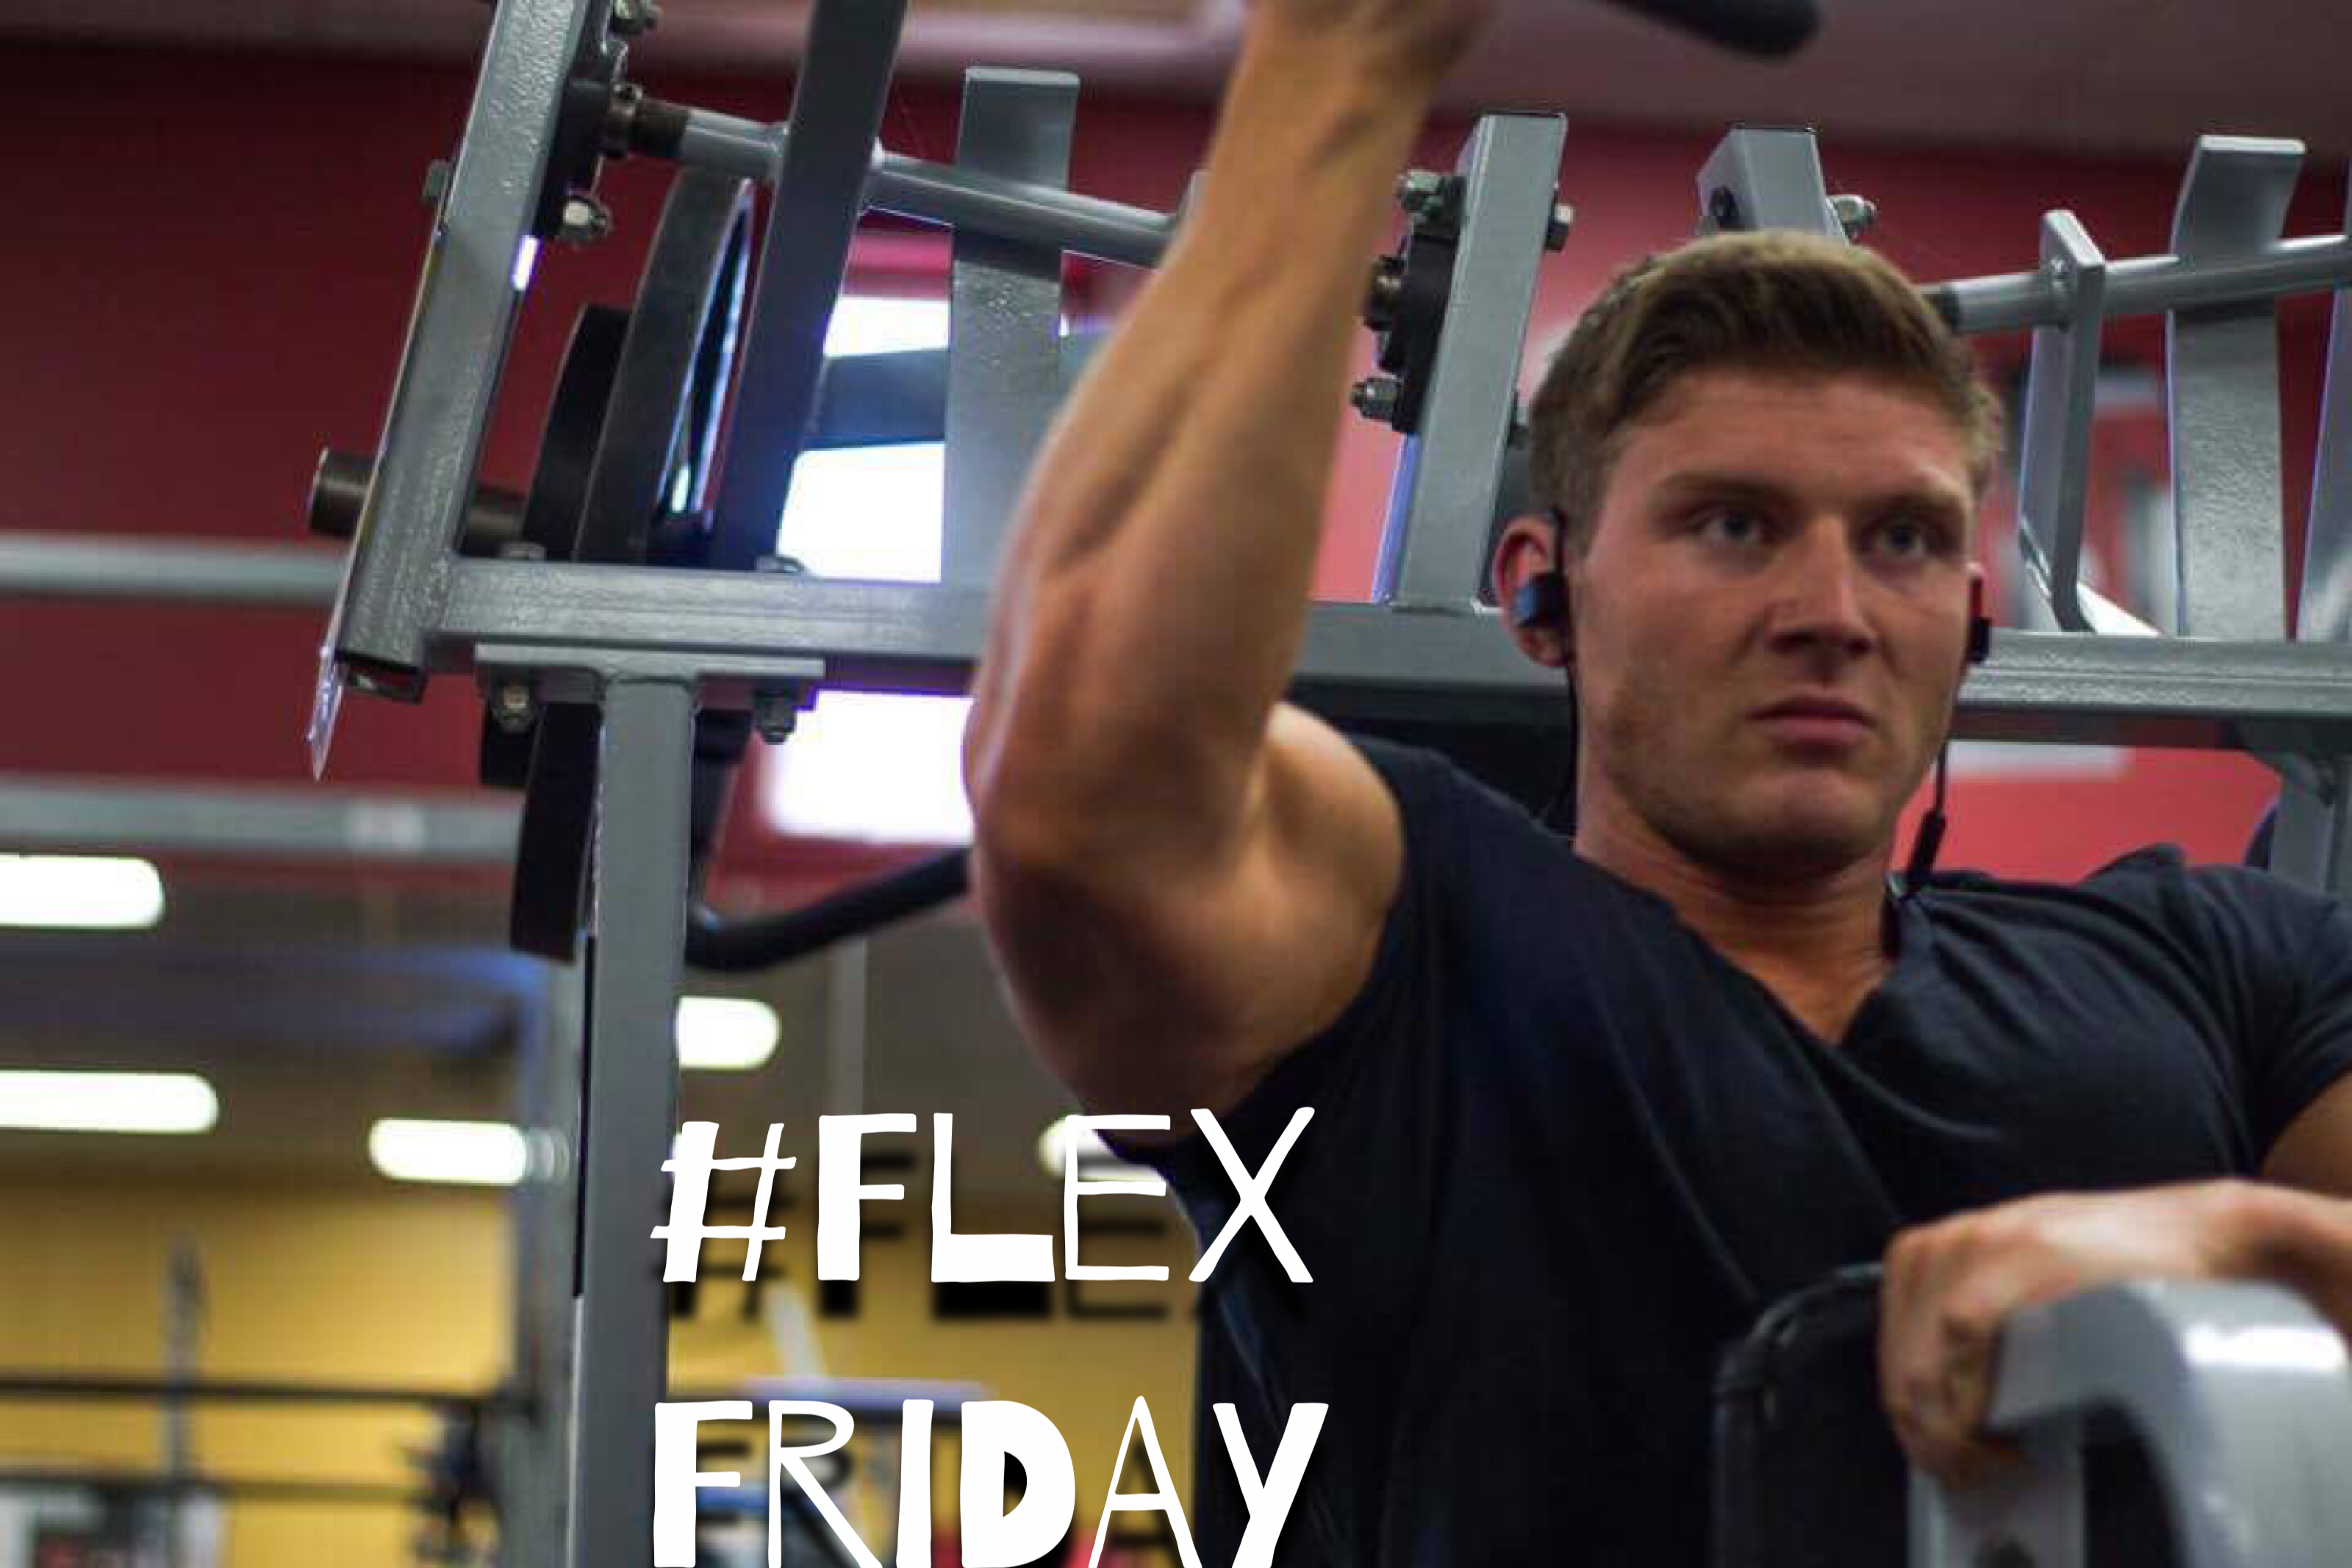 FlexFriday bodybuilding gym holland michigan